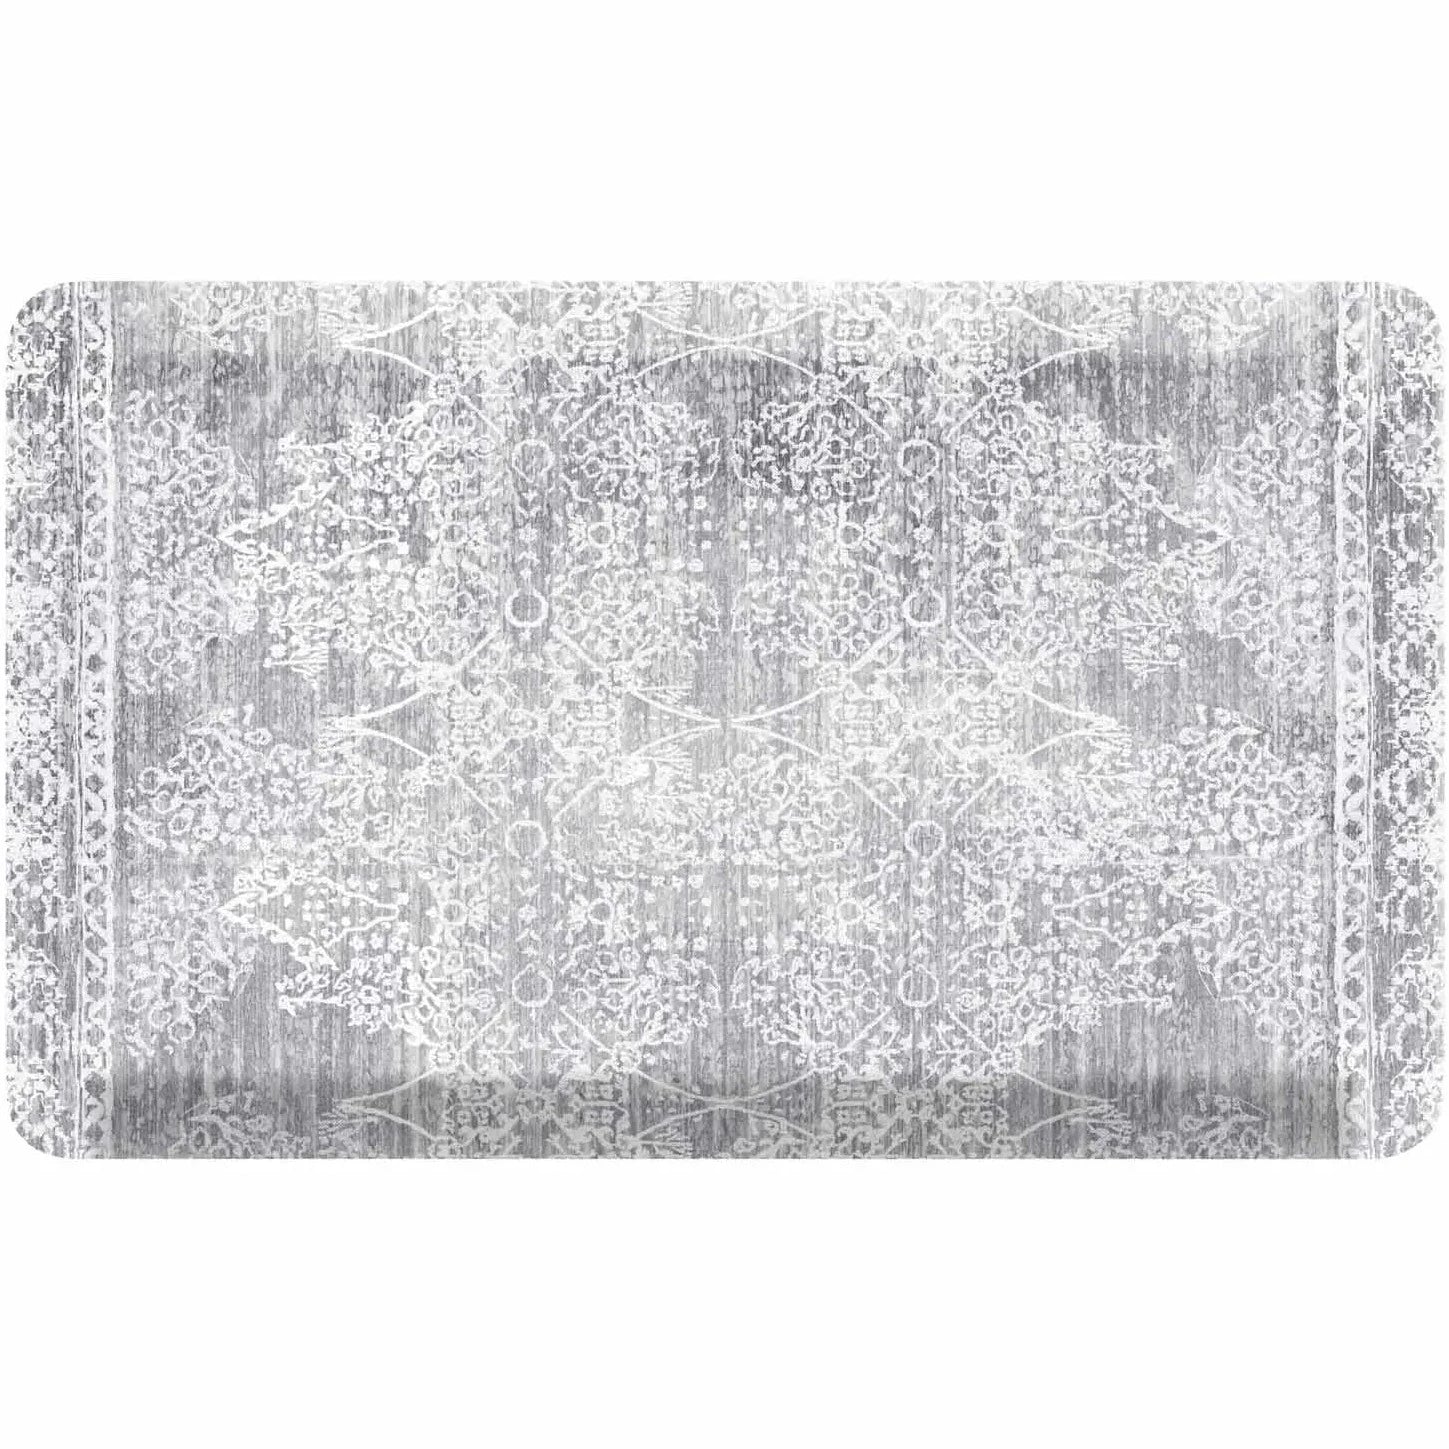 Gray neutral boho print kitchen mat shown in size 22x36